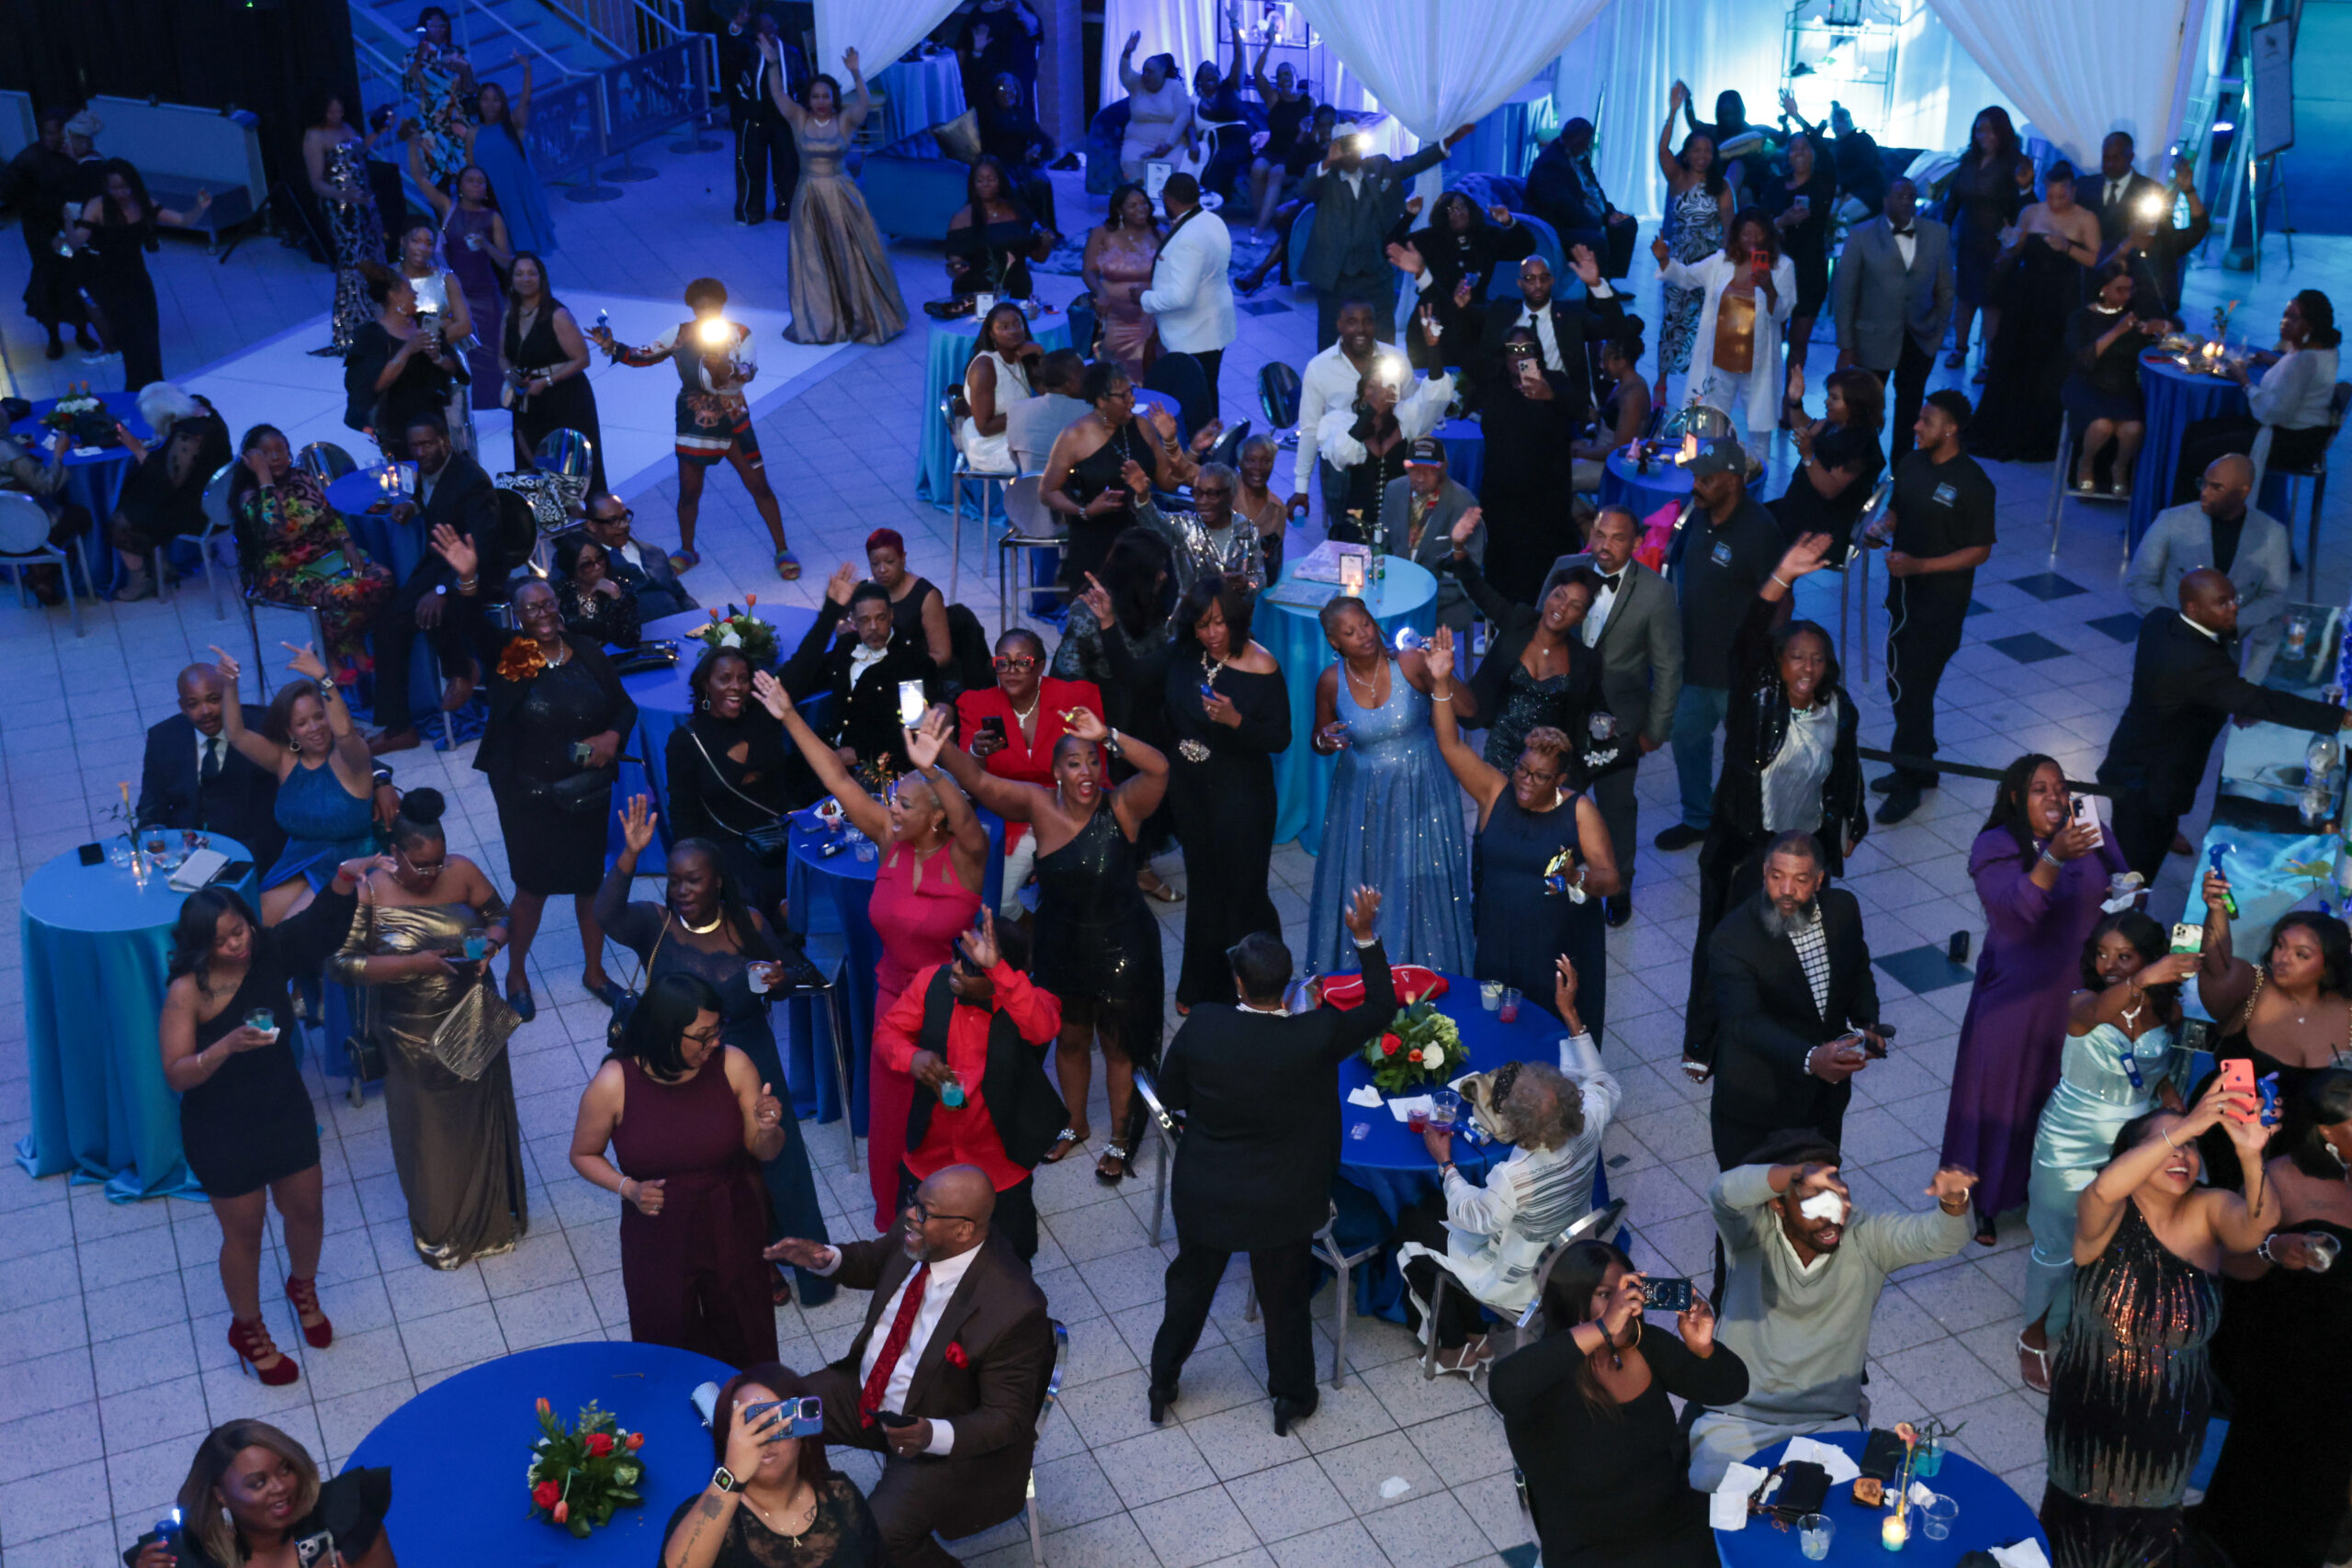 Detroit Public Schools Community District Foundation Alumni Gala Sparks Unity and Pride in City’s Renaissance